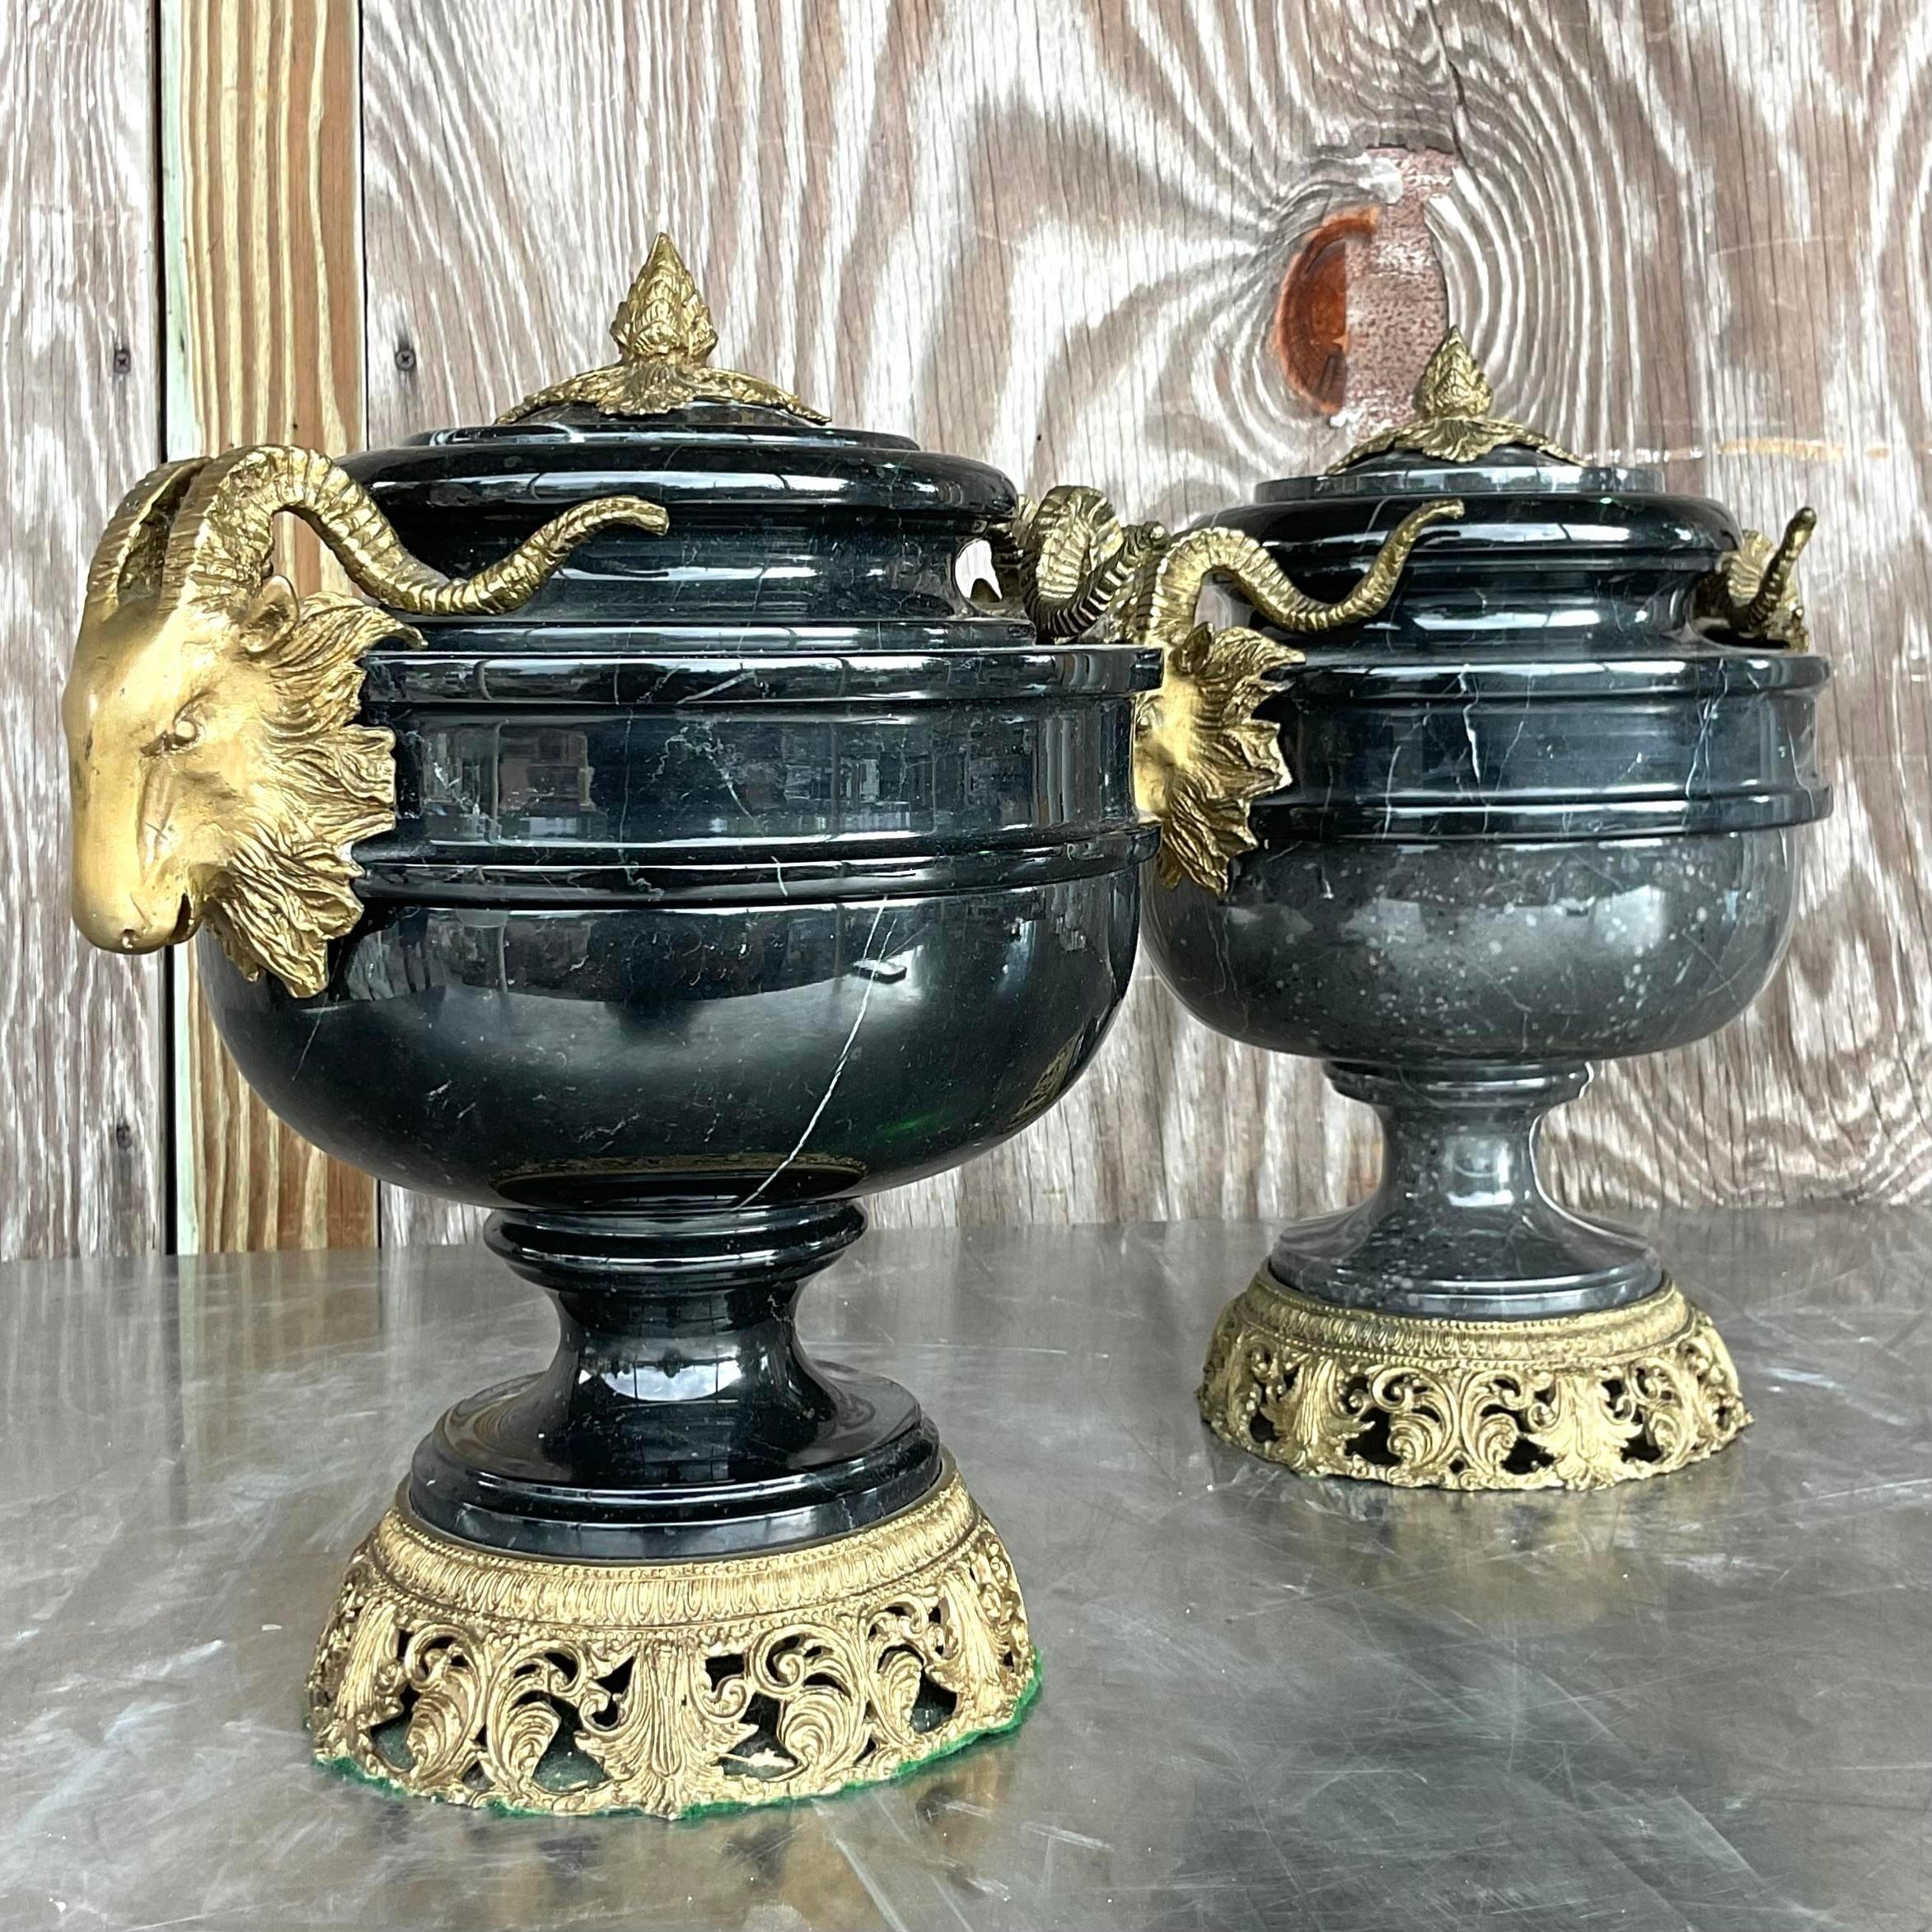 Hollywood Regency Vintage Boho Black Marble and Brass Ram’s Head Lidded Urns - a Pair For Sale